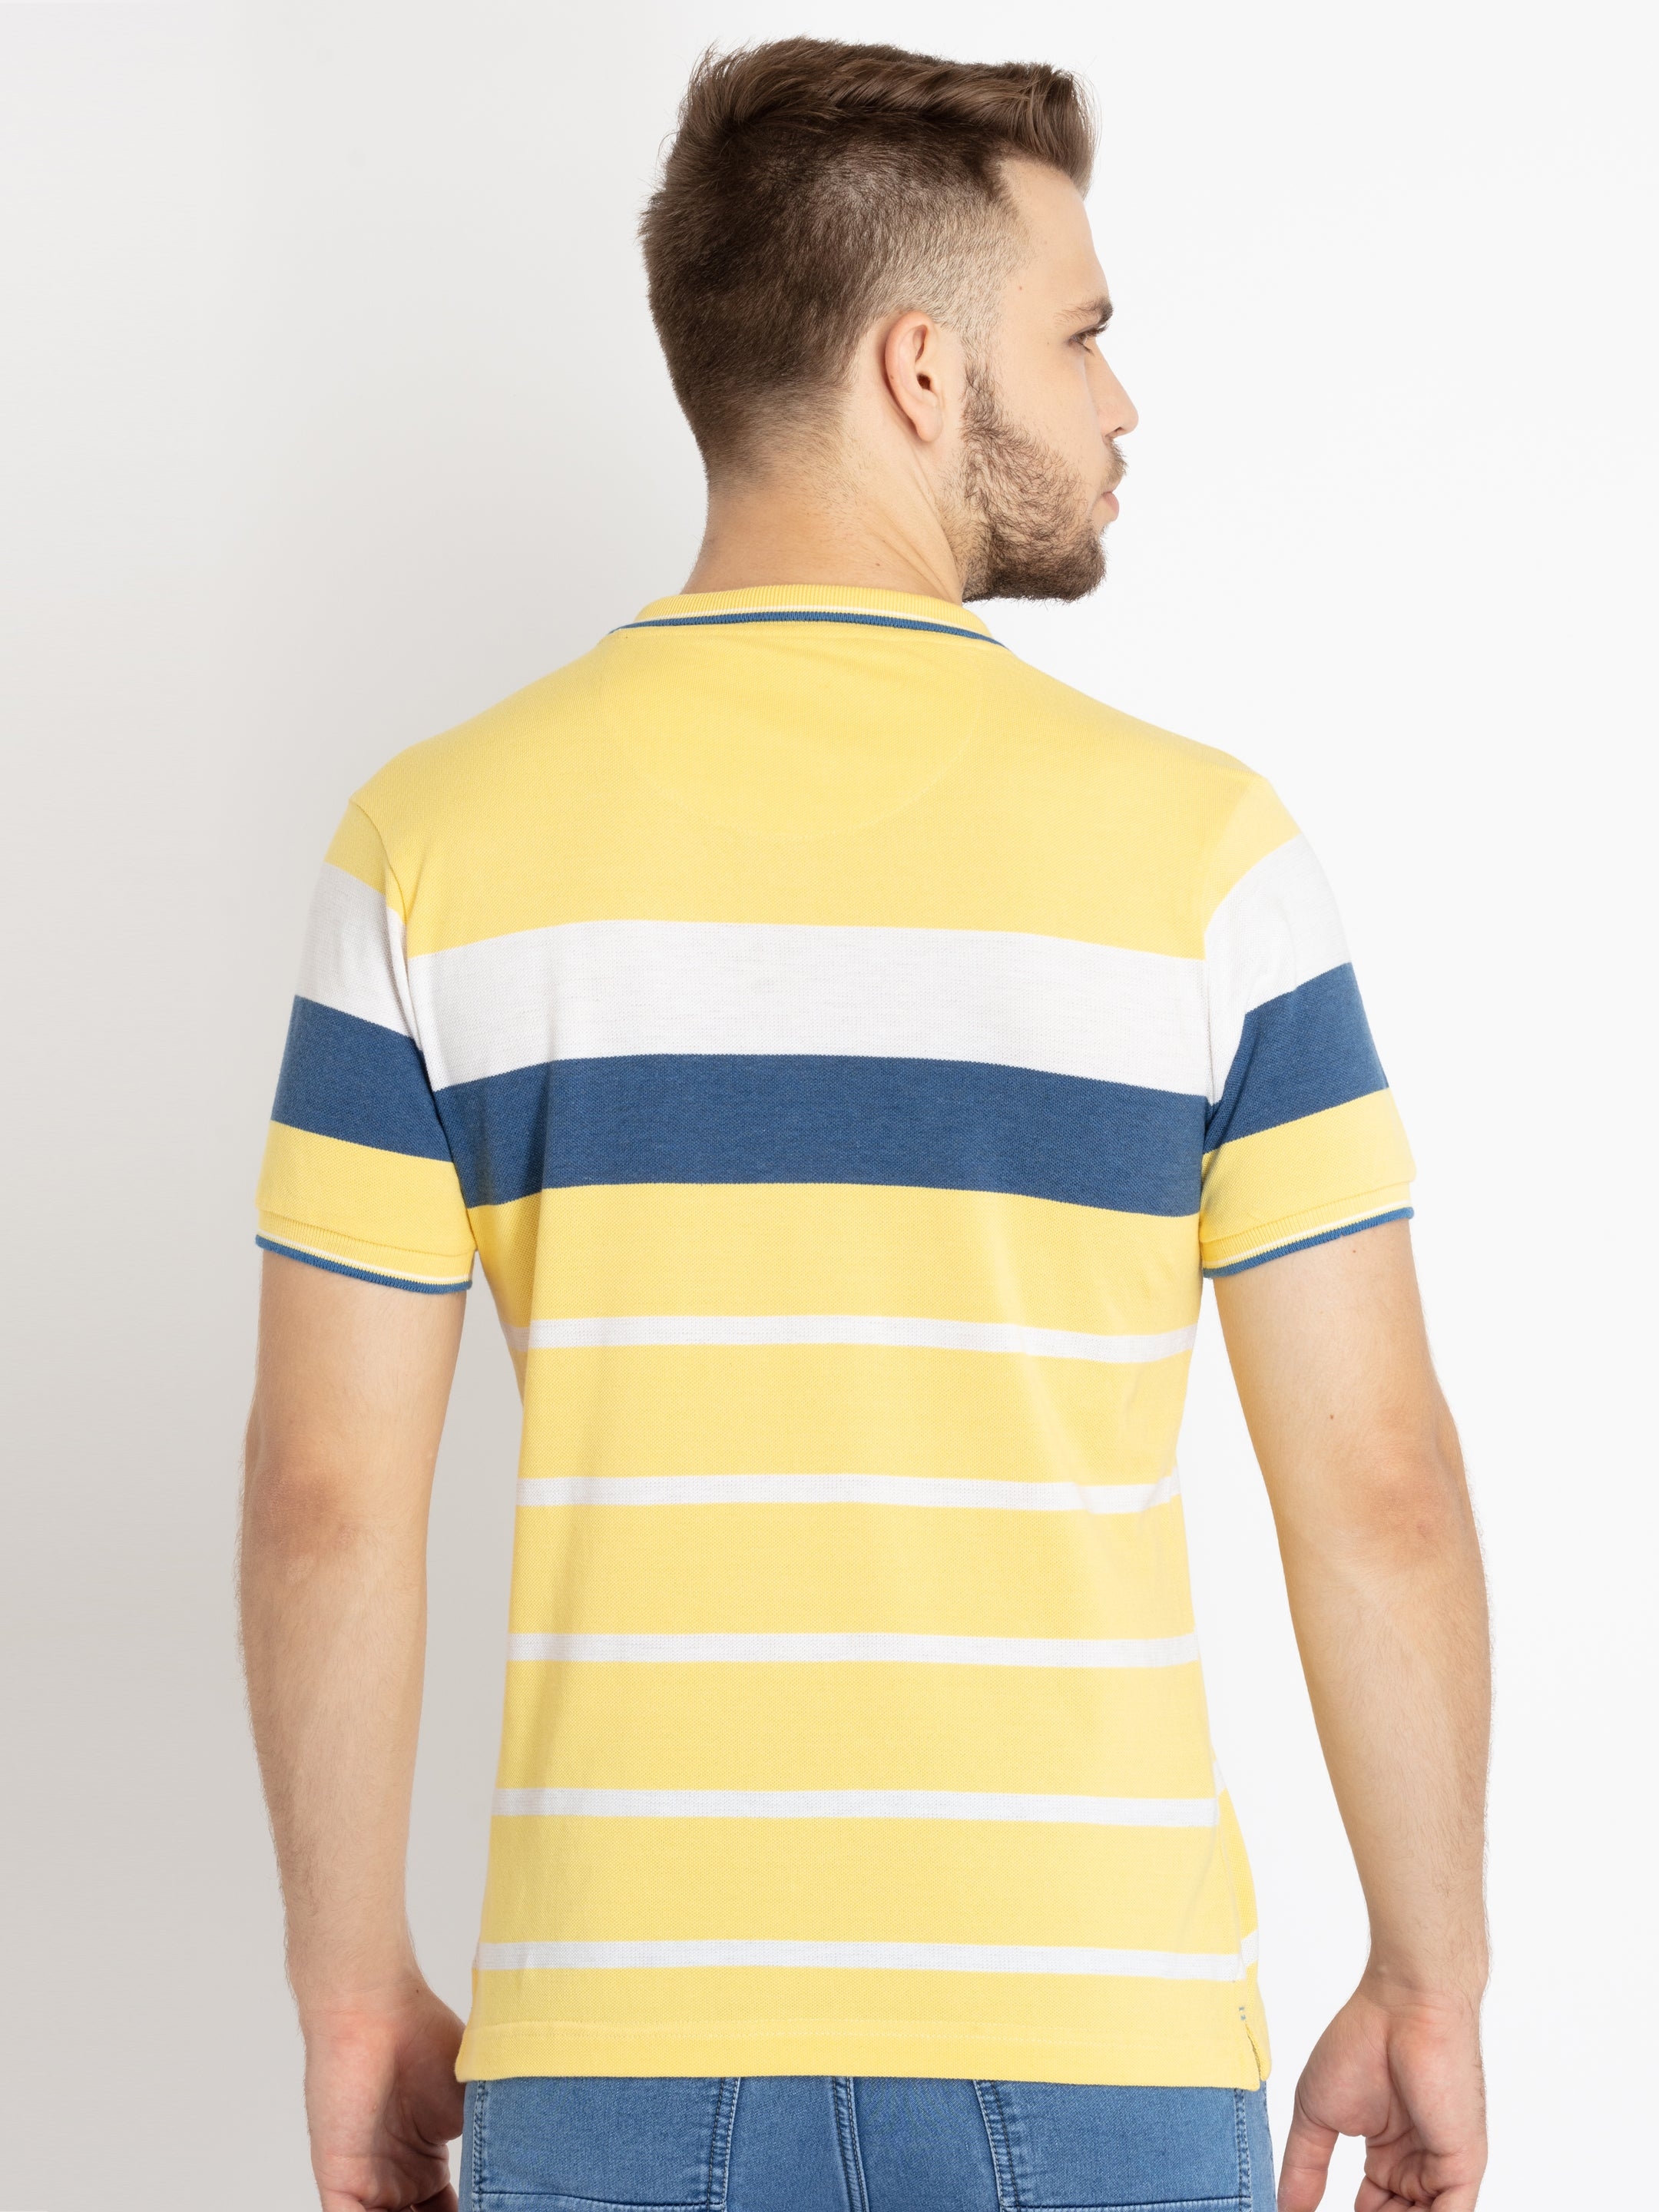 Status Quo | Men's Yellow Cotton Striped Polo T-Shirts 2